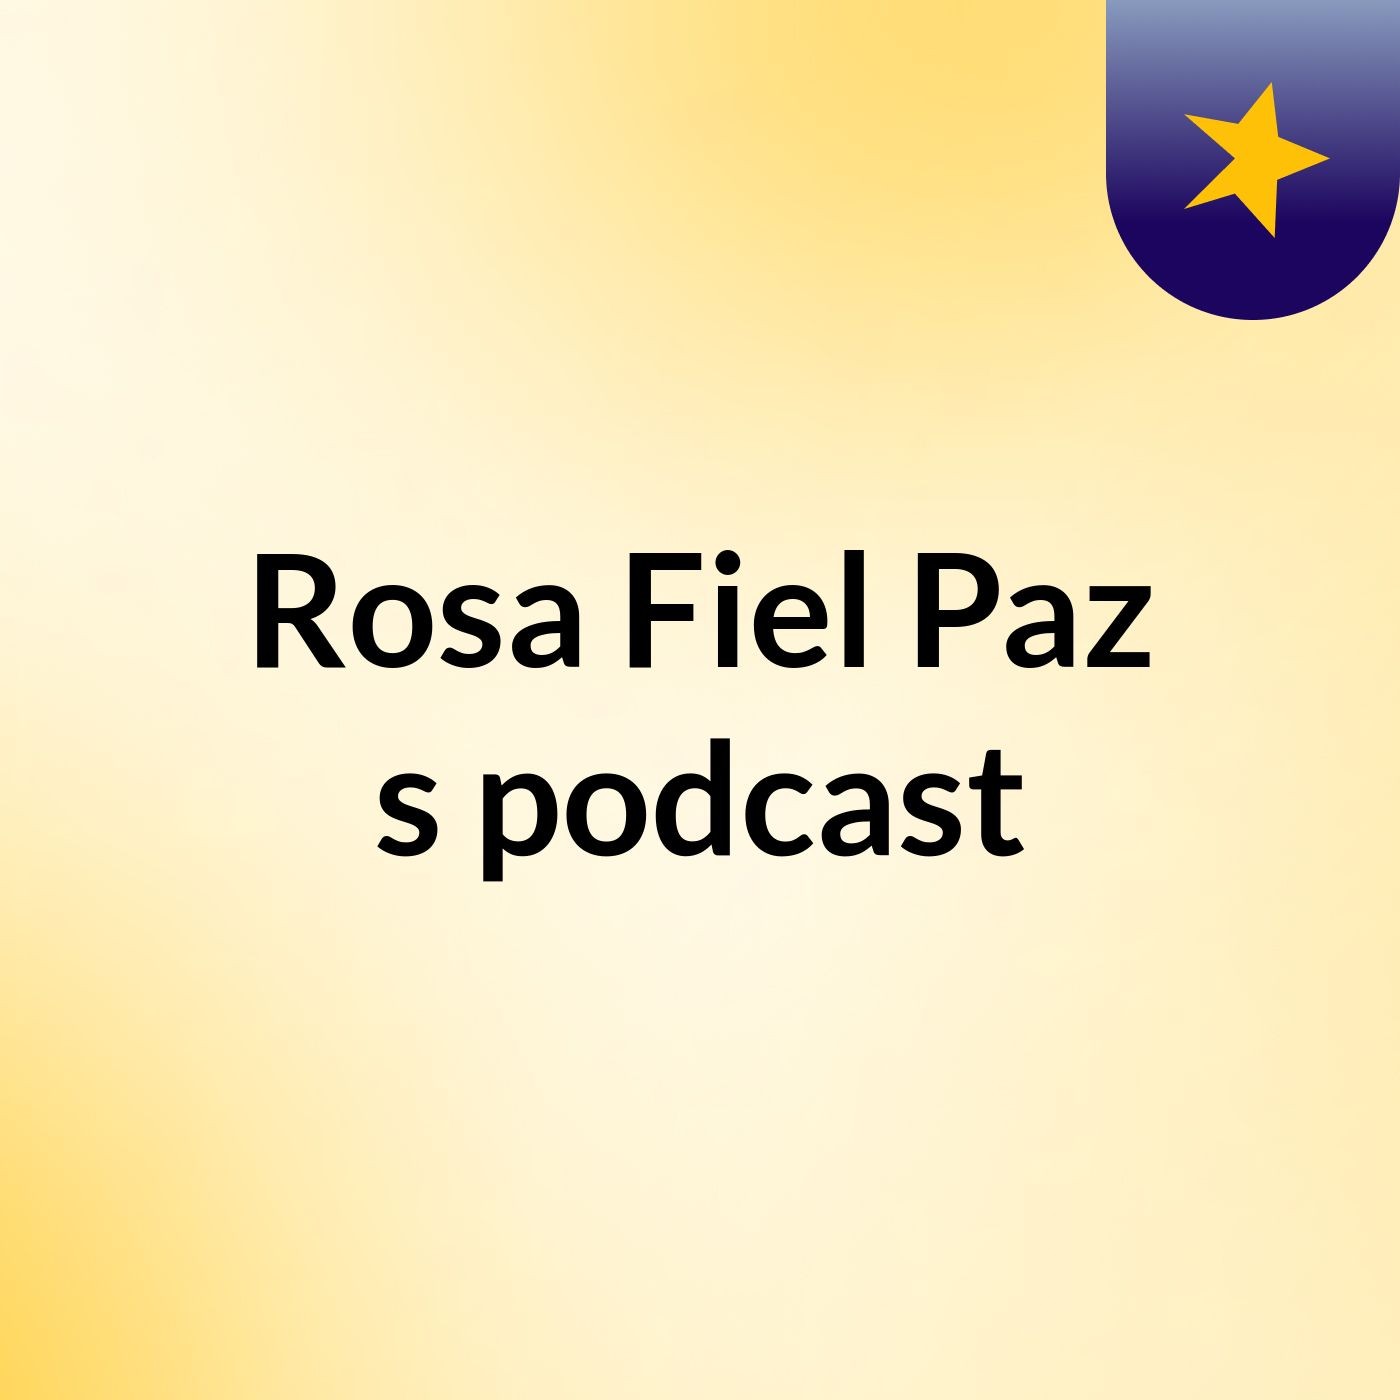 Rosa Fiel Paz's podcast